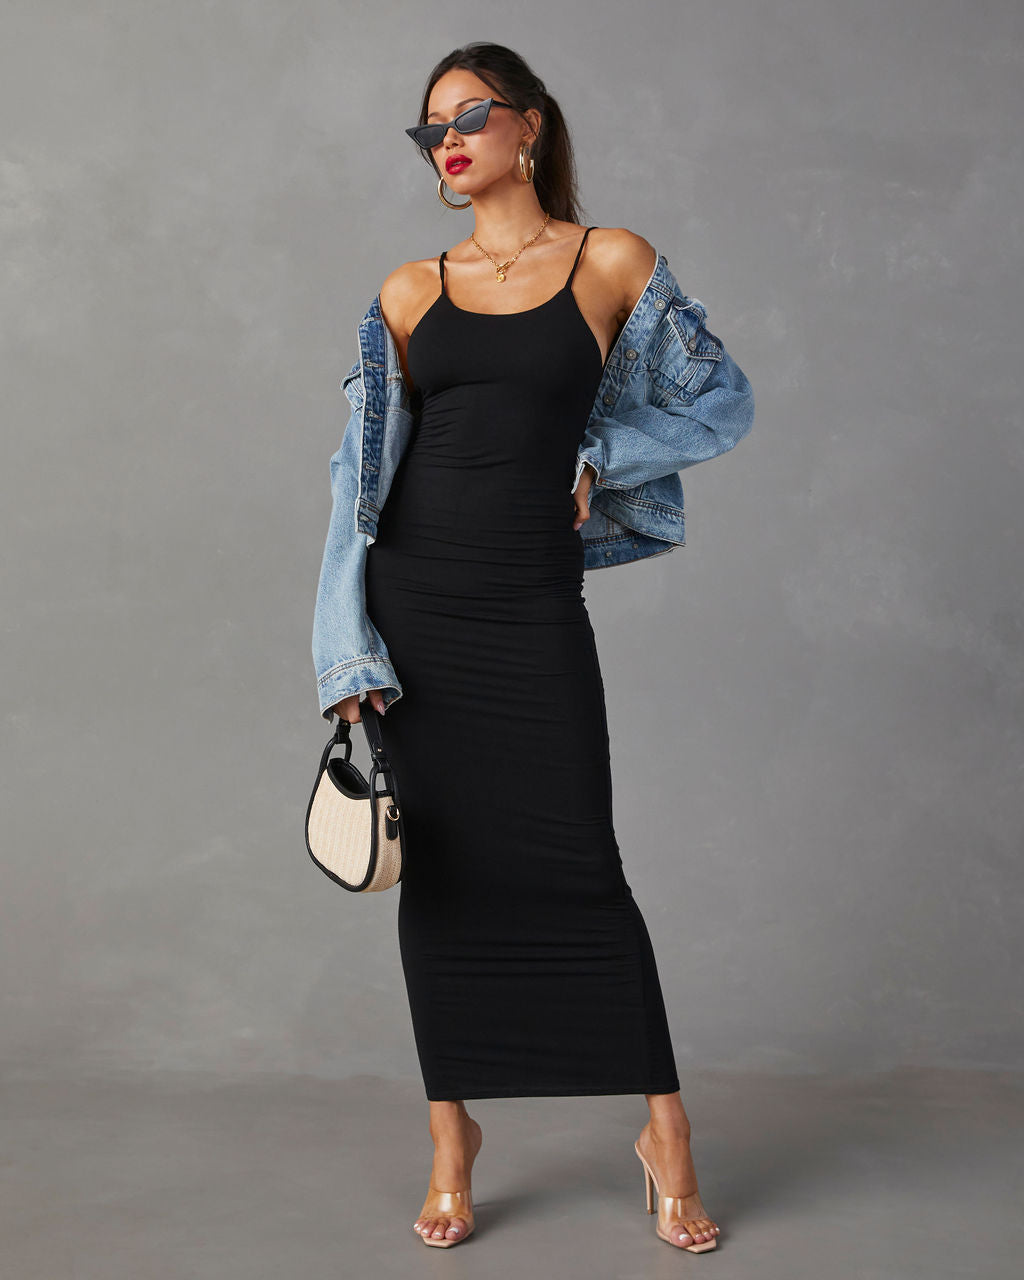 VICI - BESTSELLER // NEW COLOR Antonia Maxi Dress - Black $58 Also